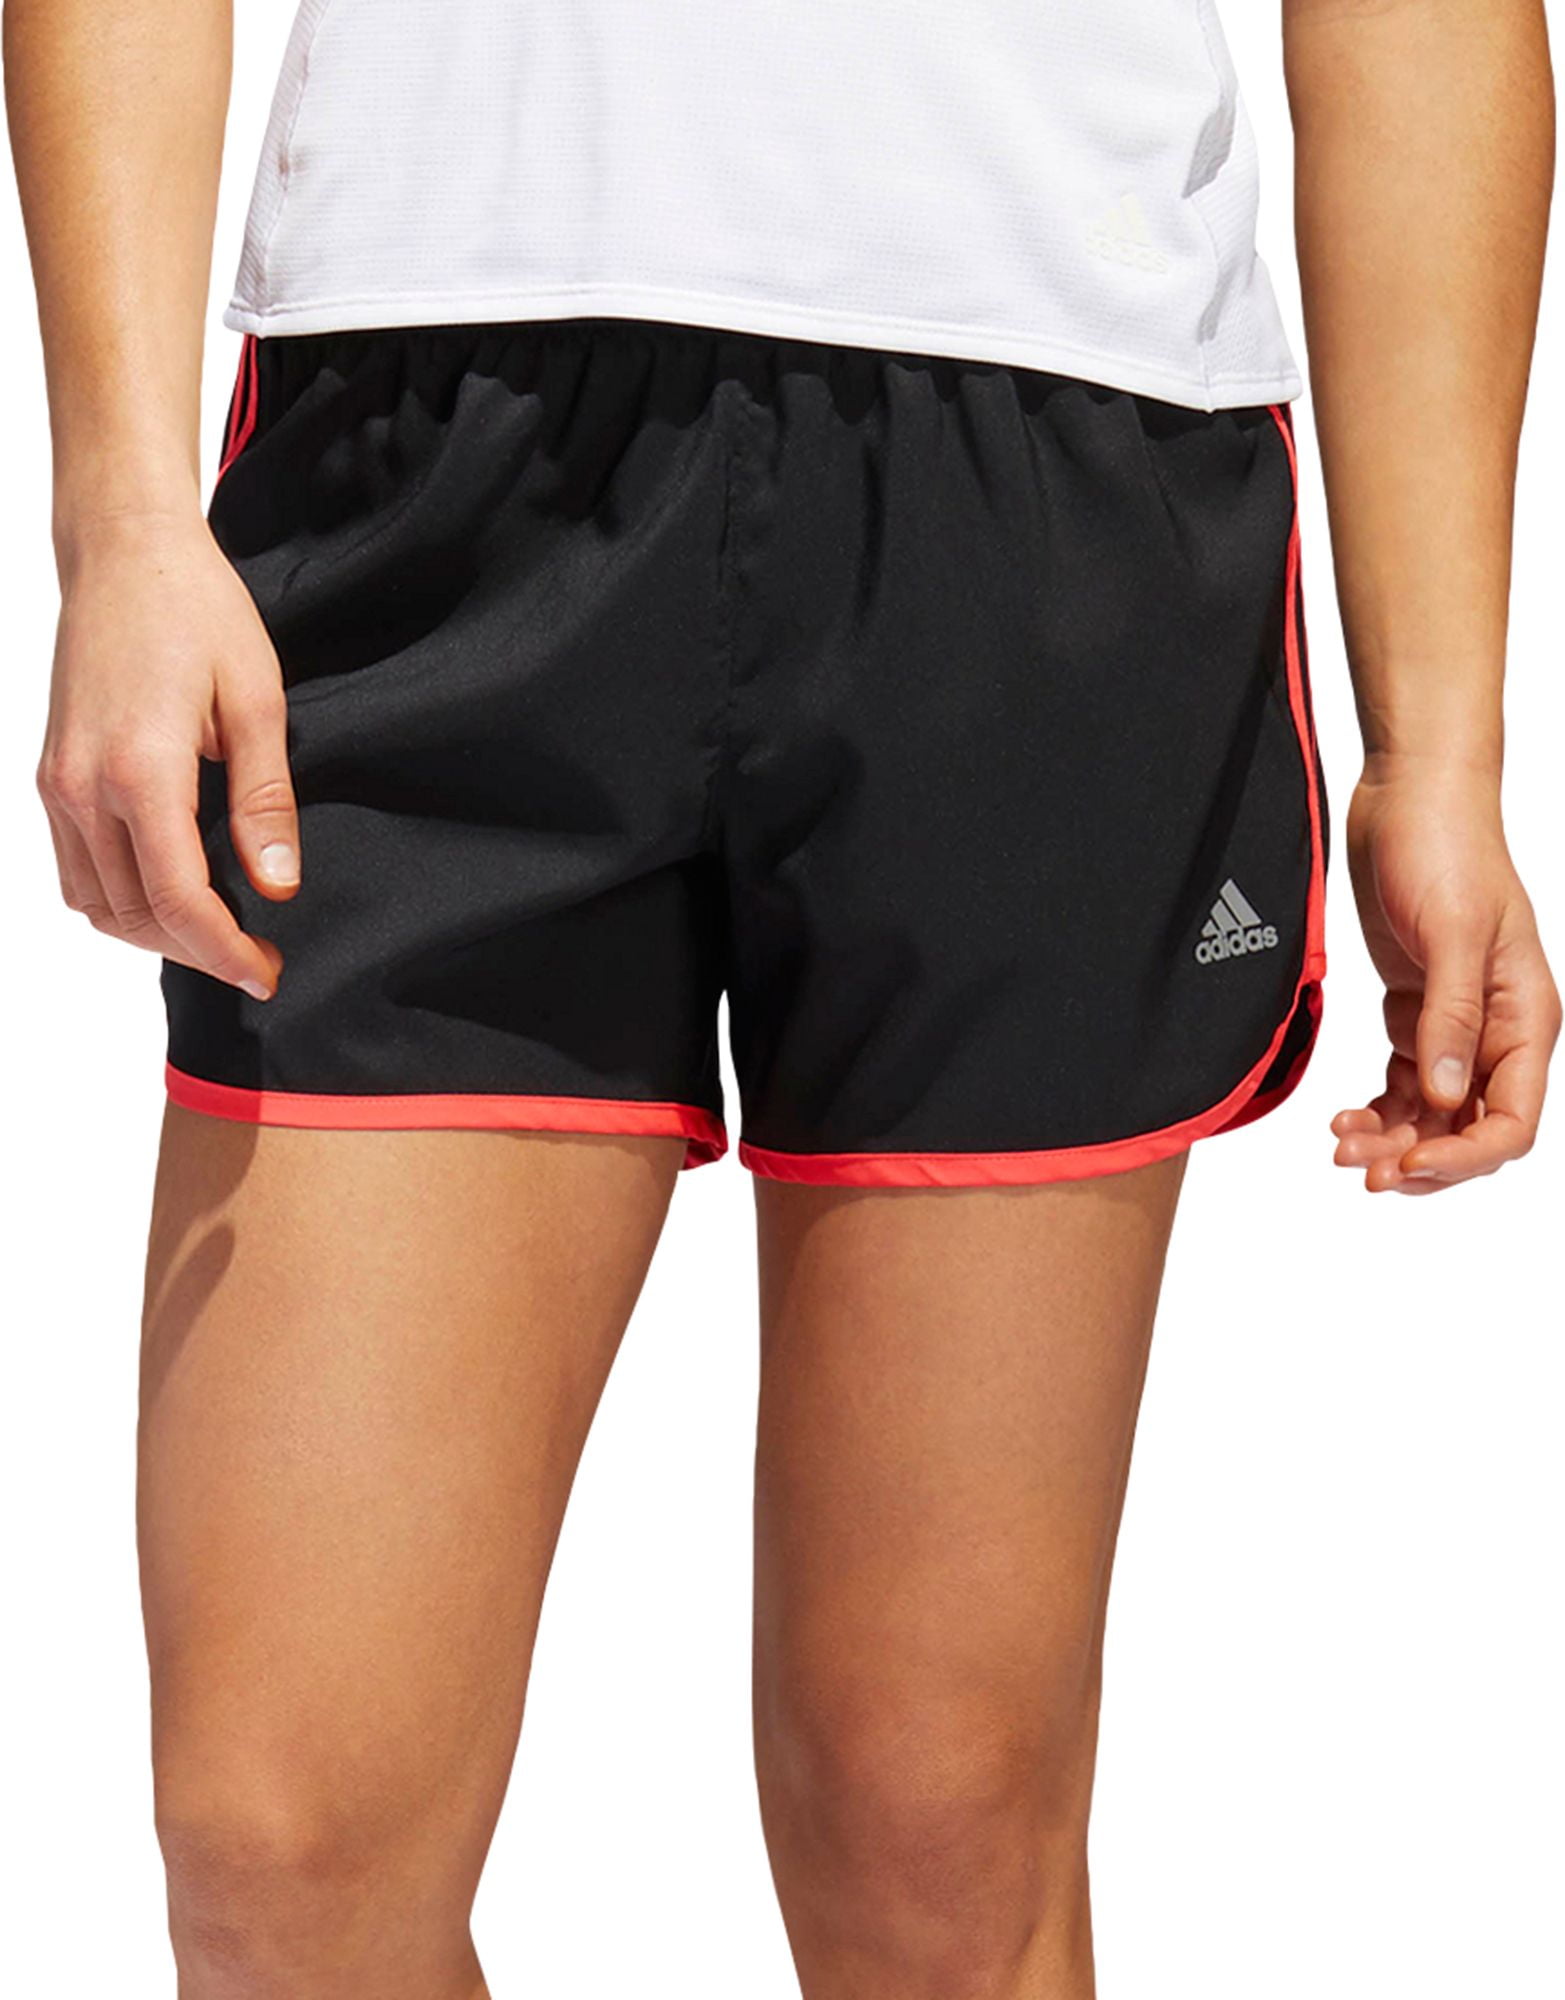 adidas marathon shorts womens